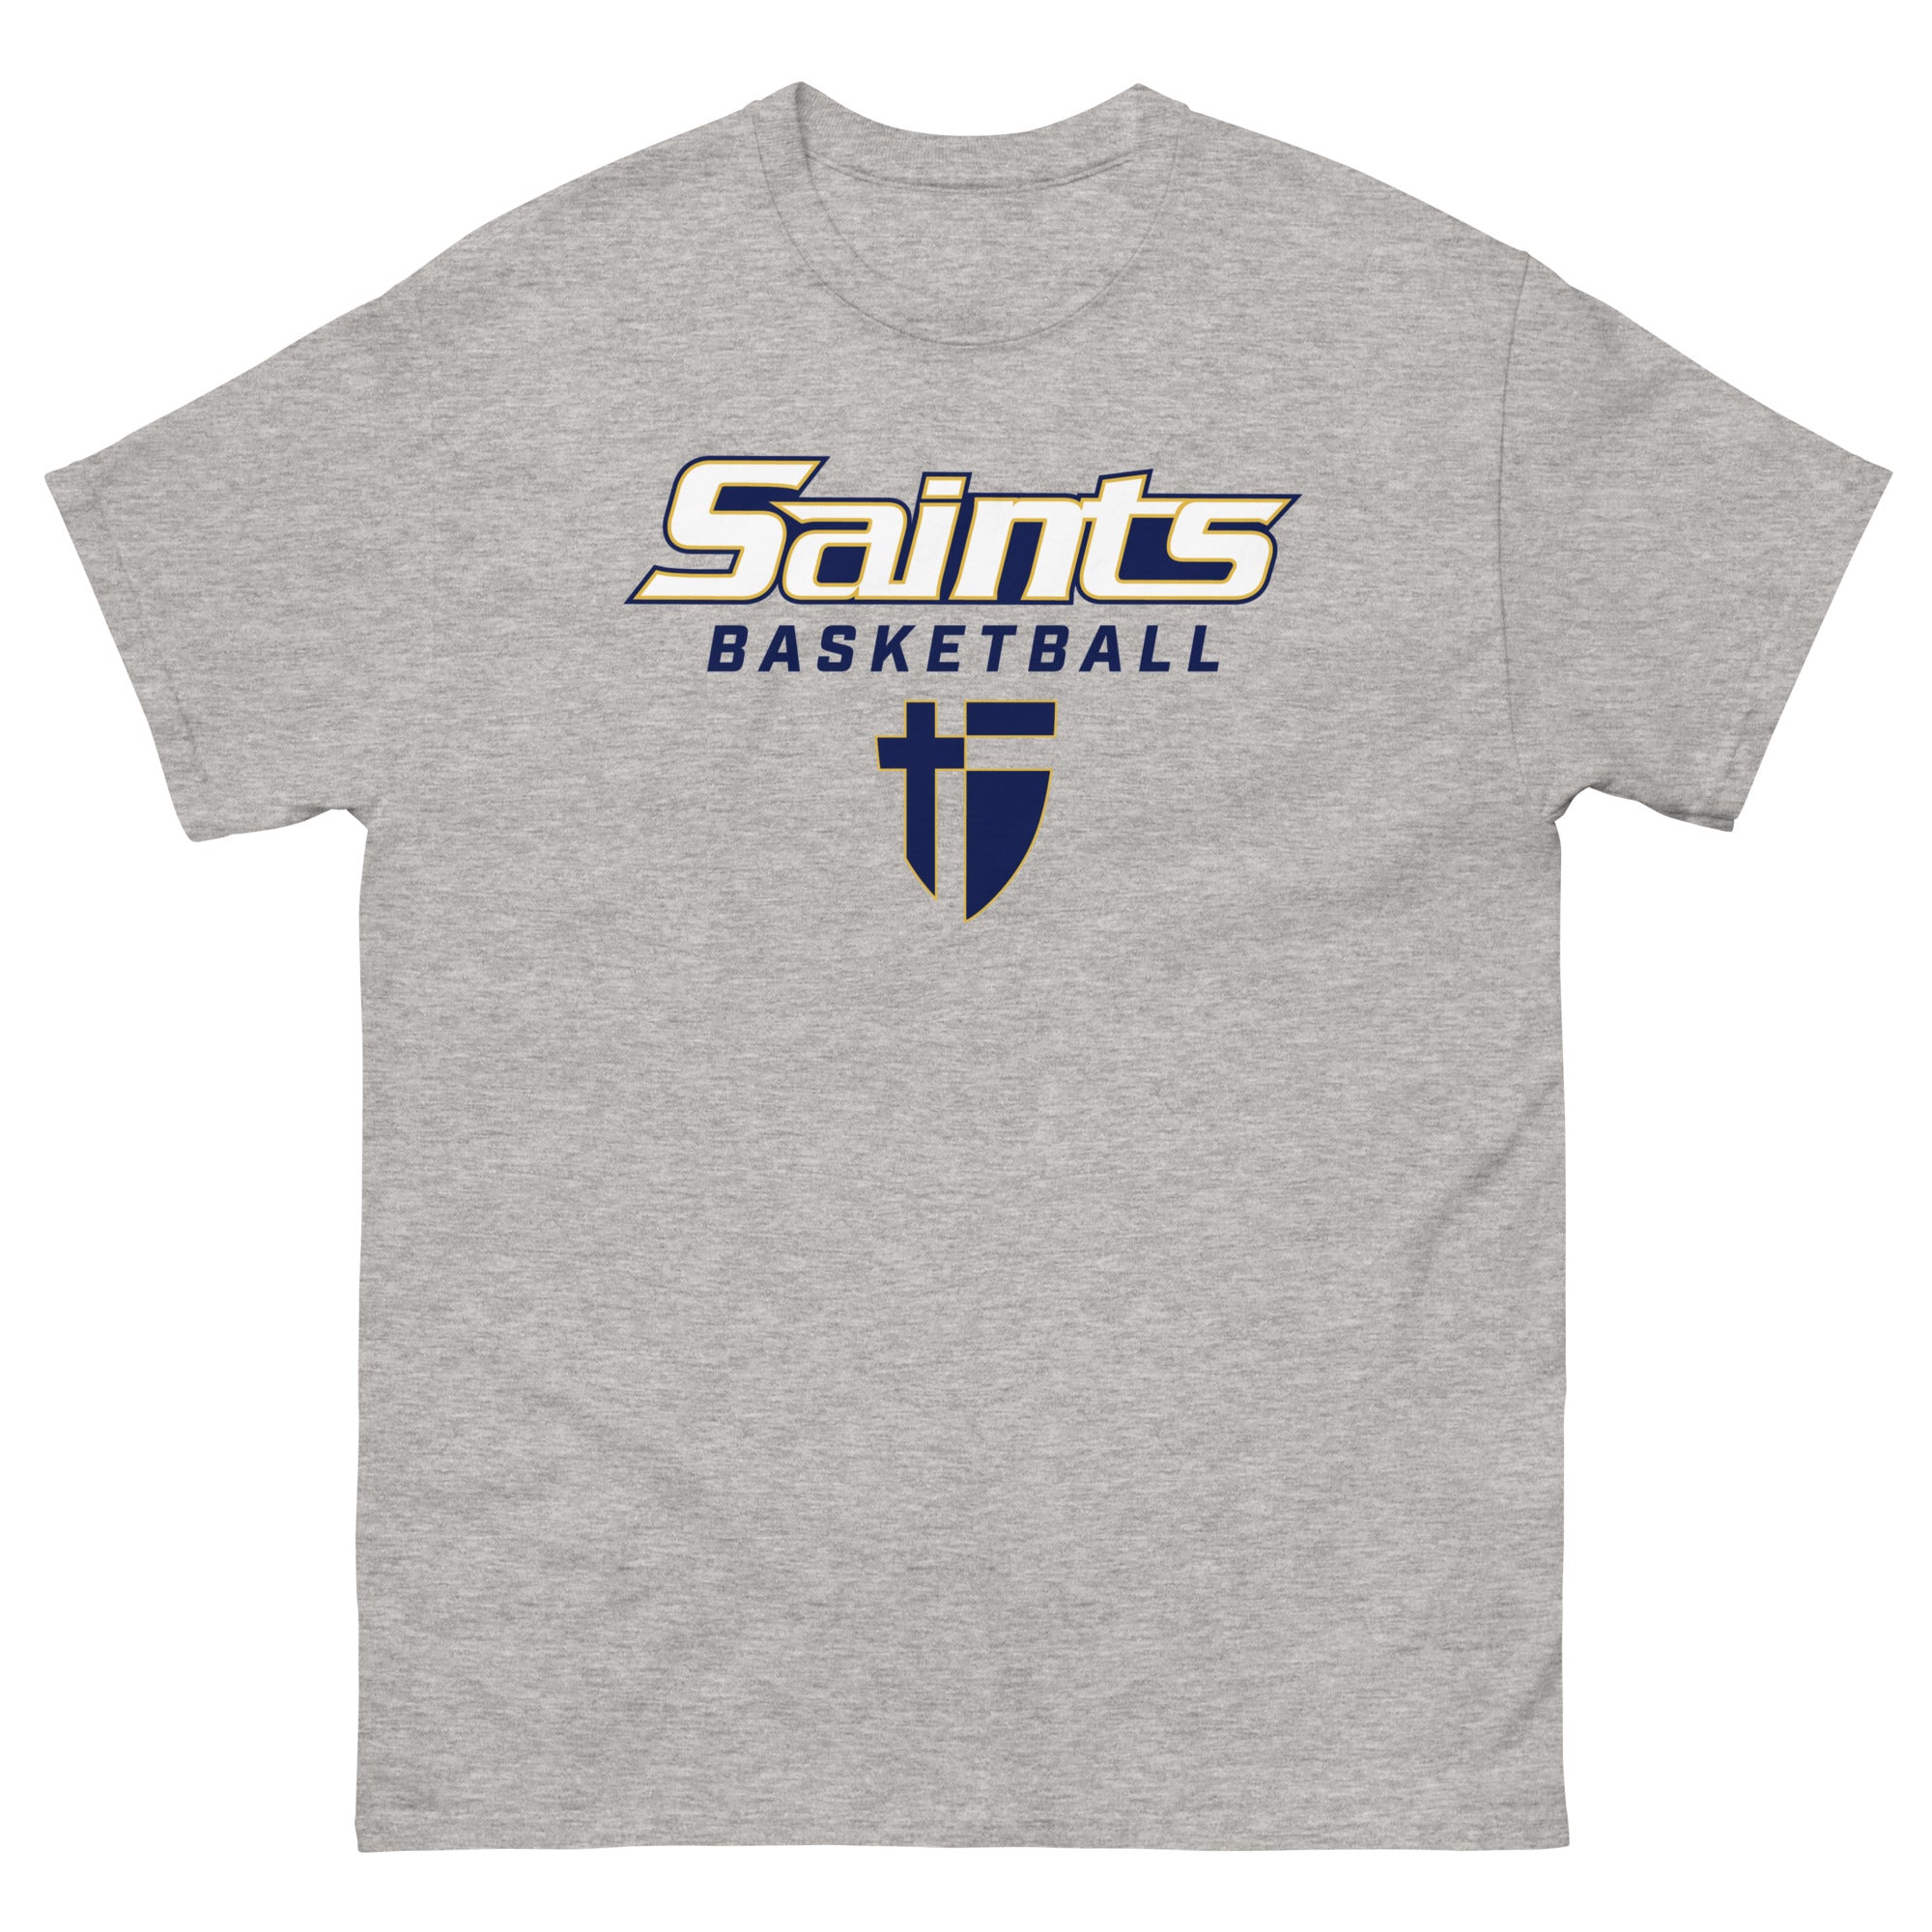 Saints Basketball Men's classic tee